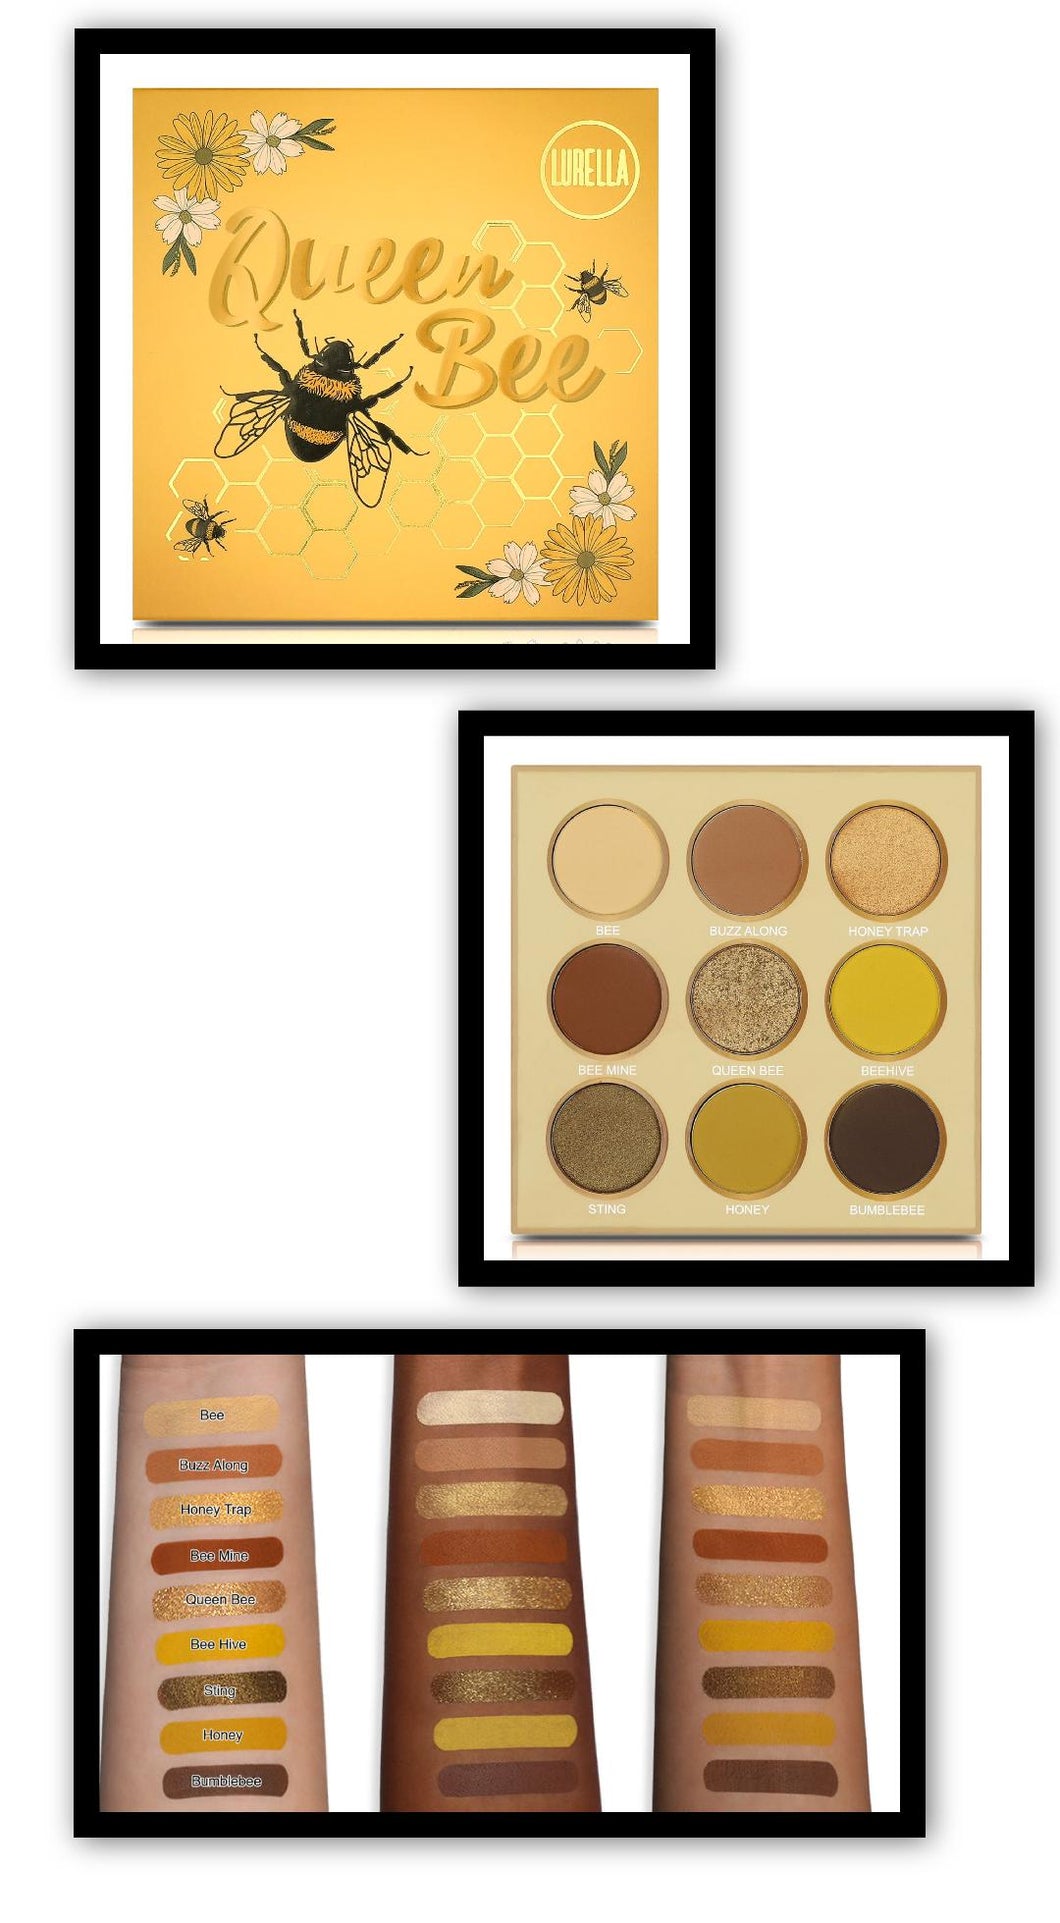 Queen Bee palette by Lurella